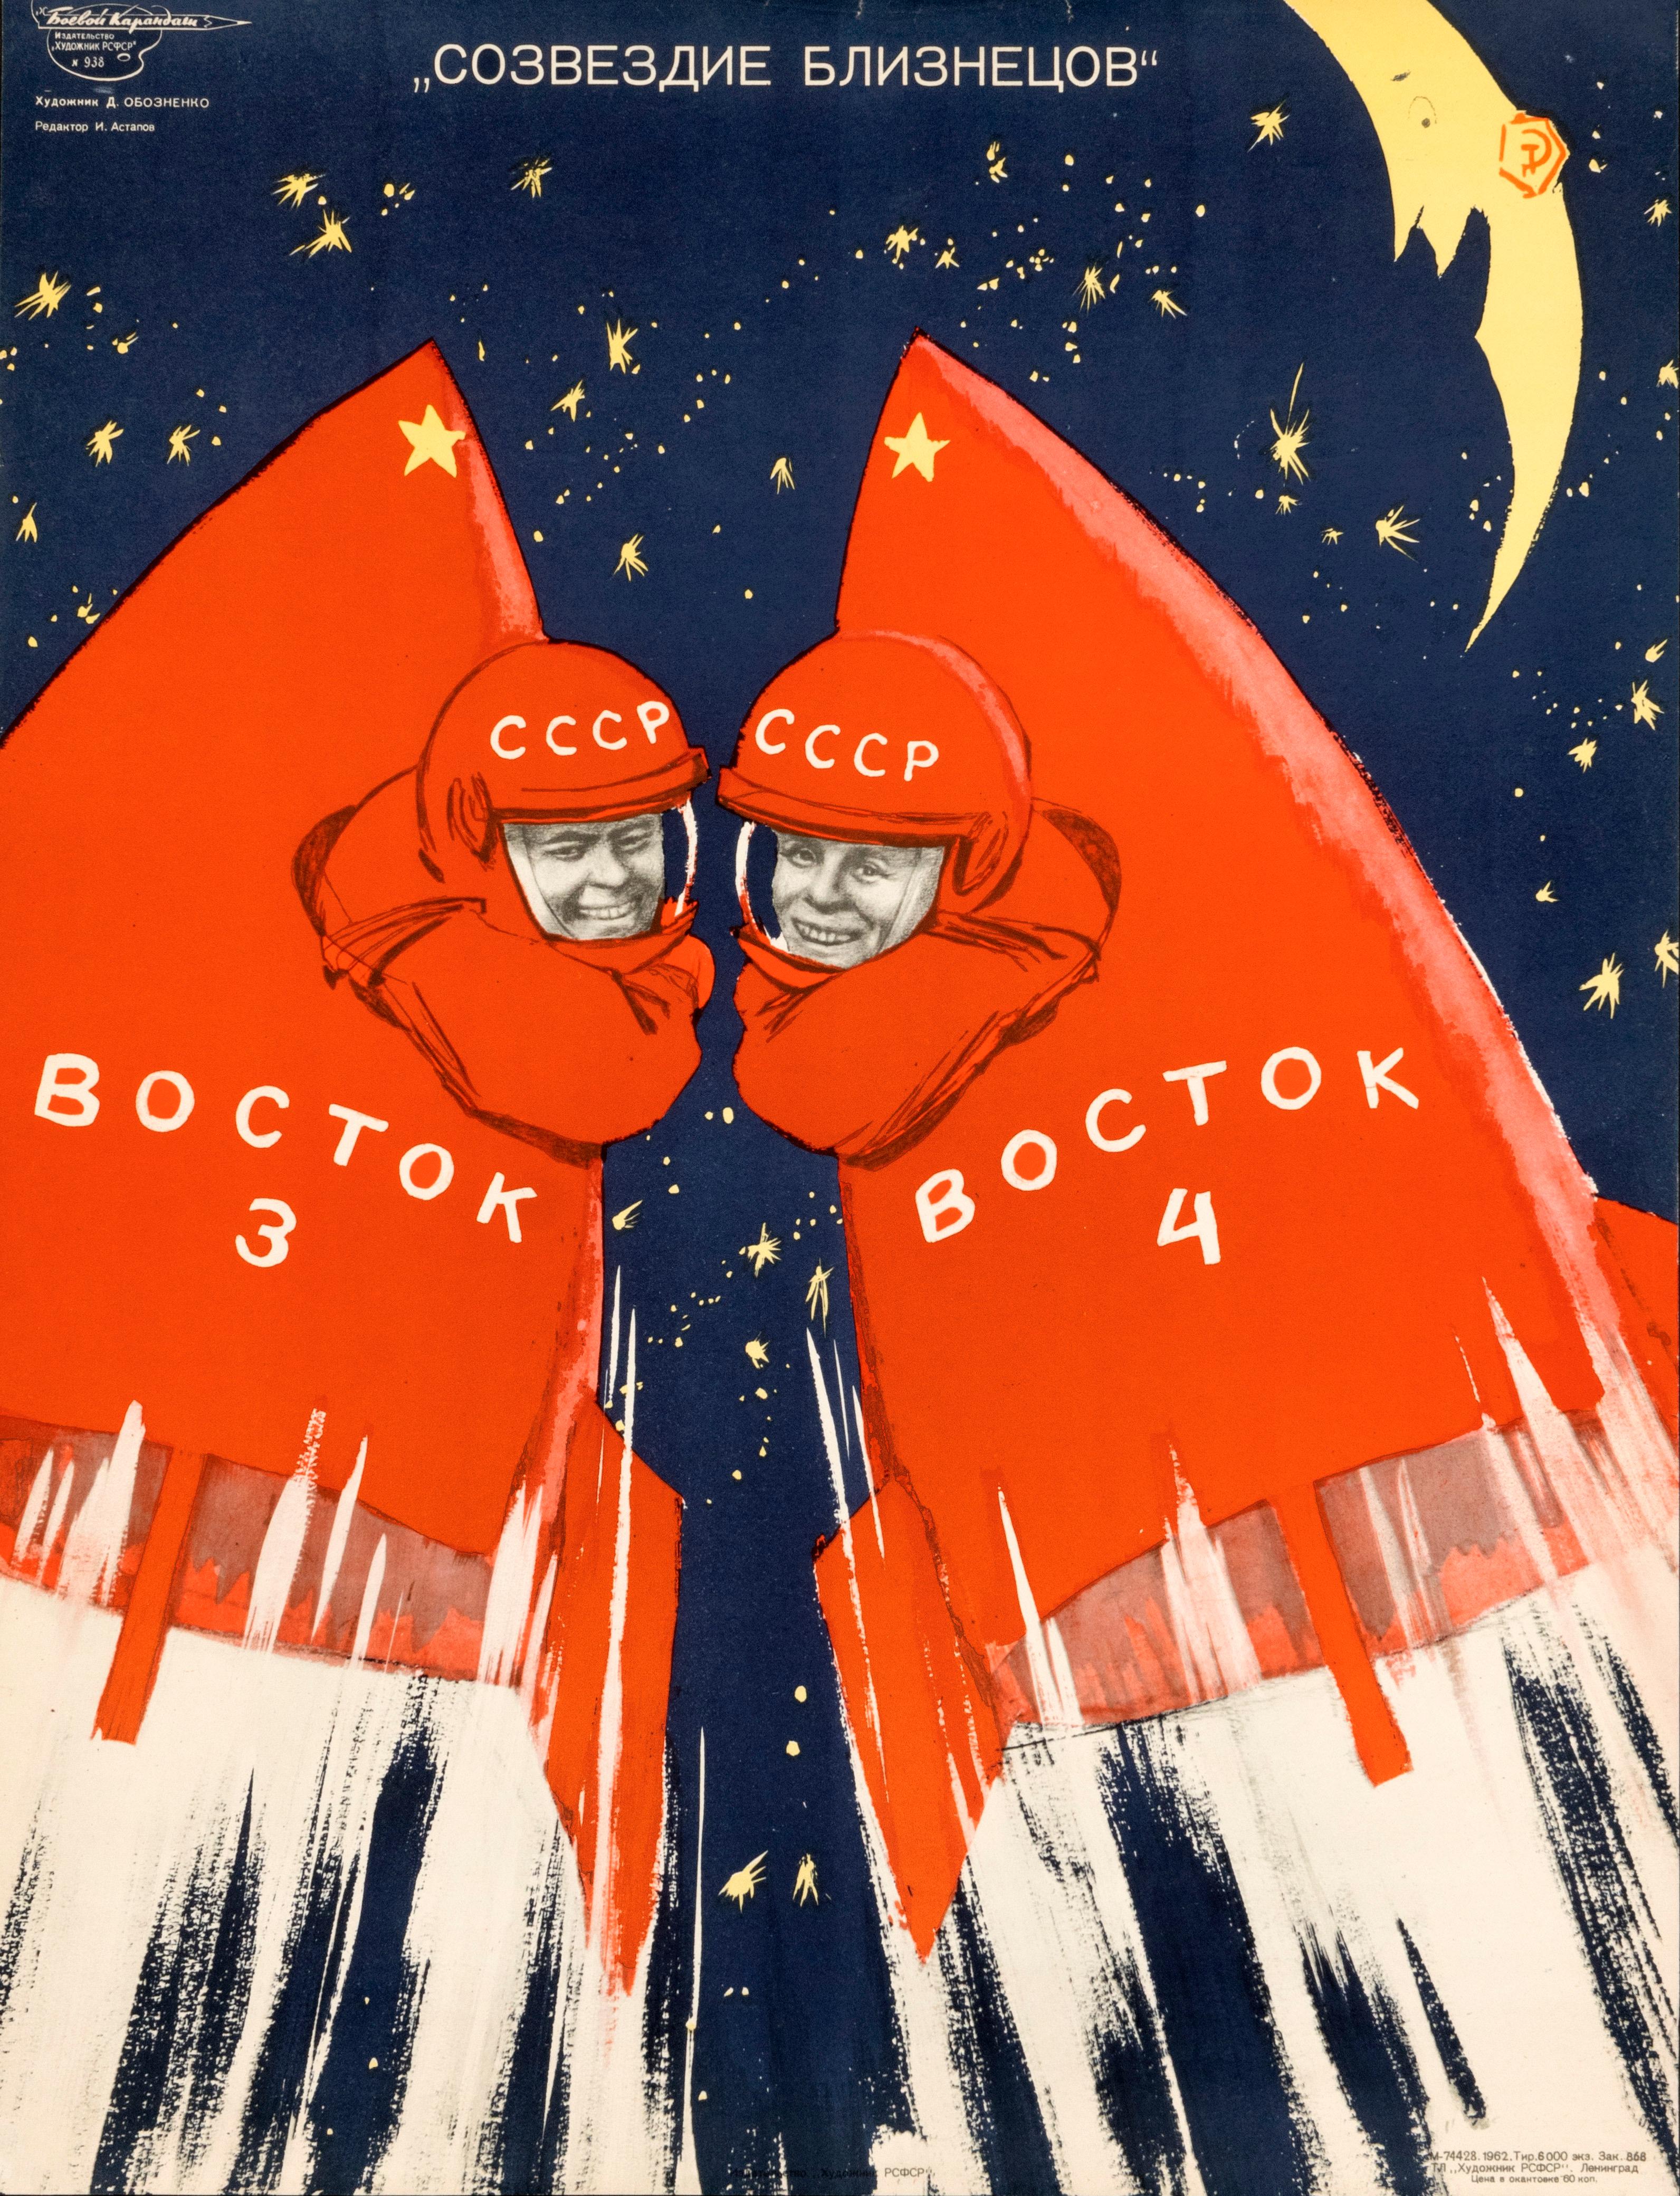 "Constellation Gemini" Original Vintage Space Age Propaganda Poster - Print by D. Oboznenko